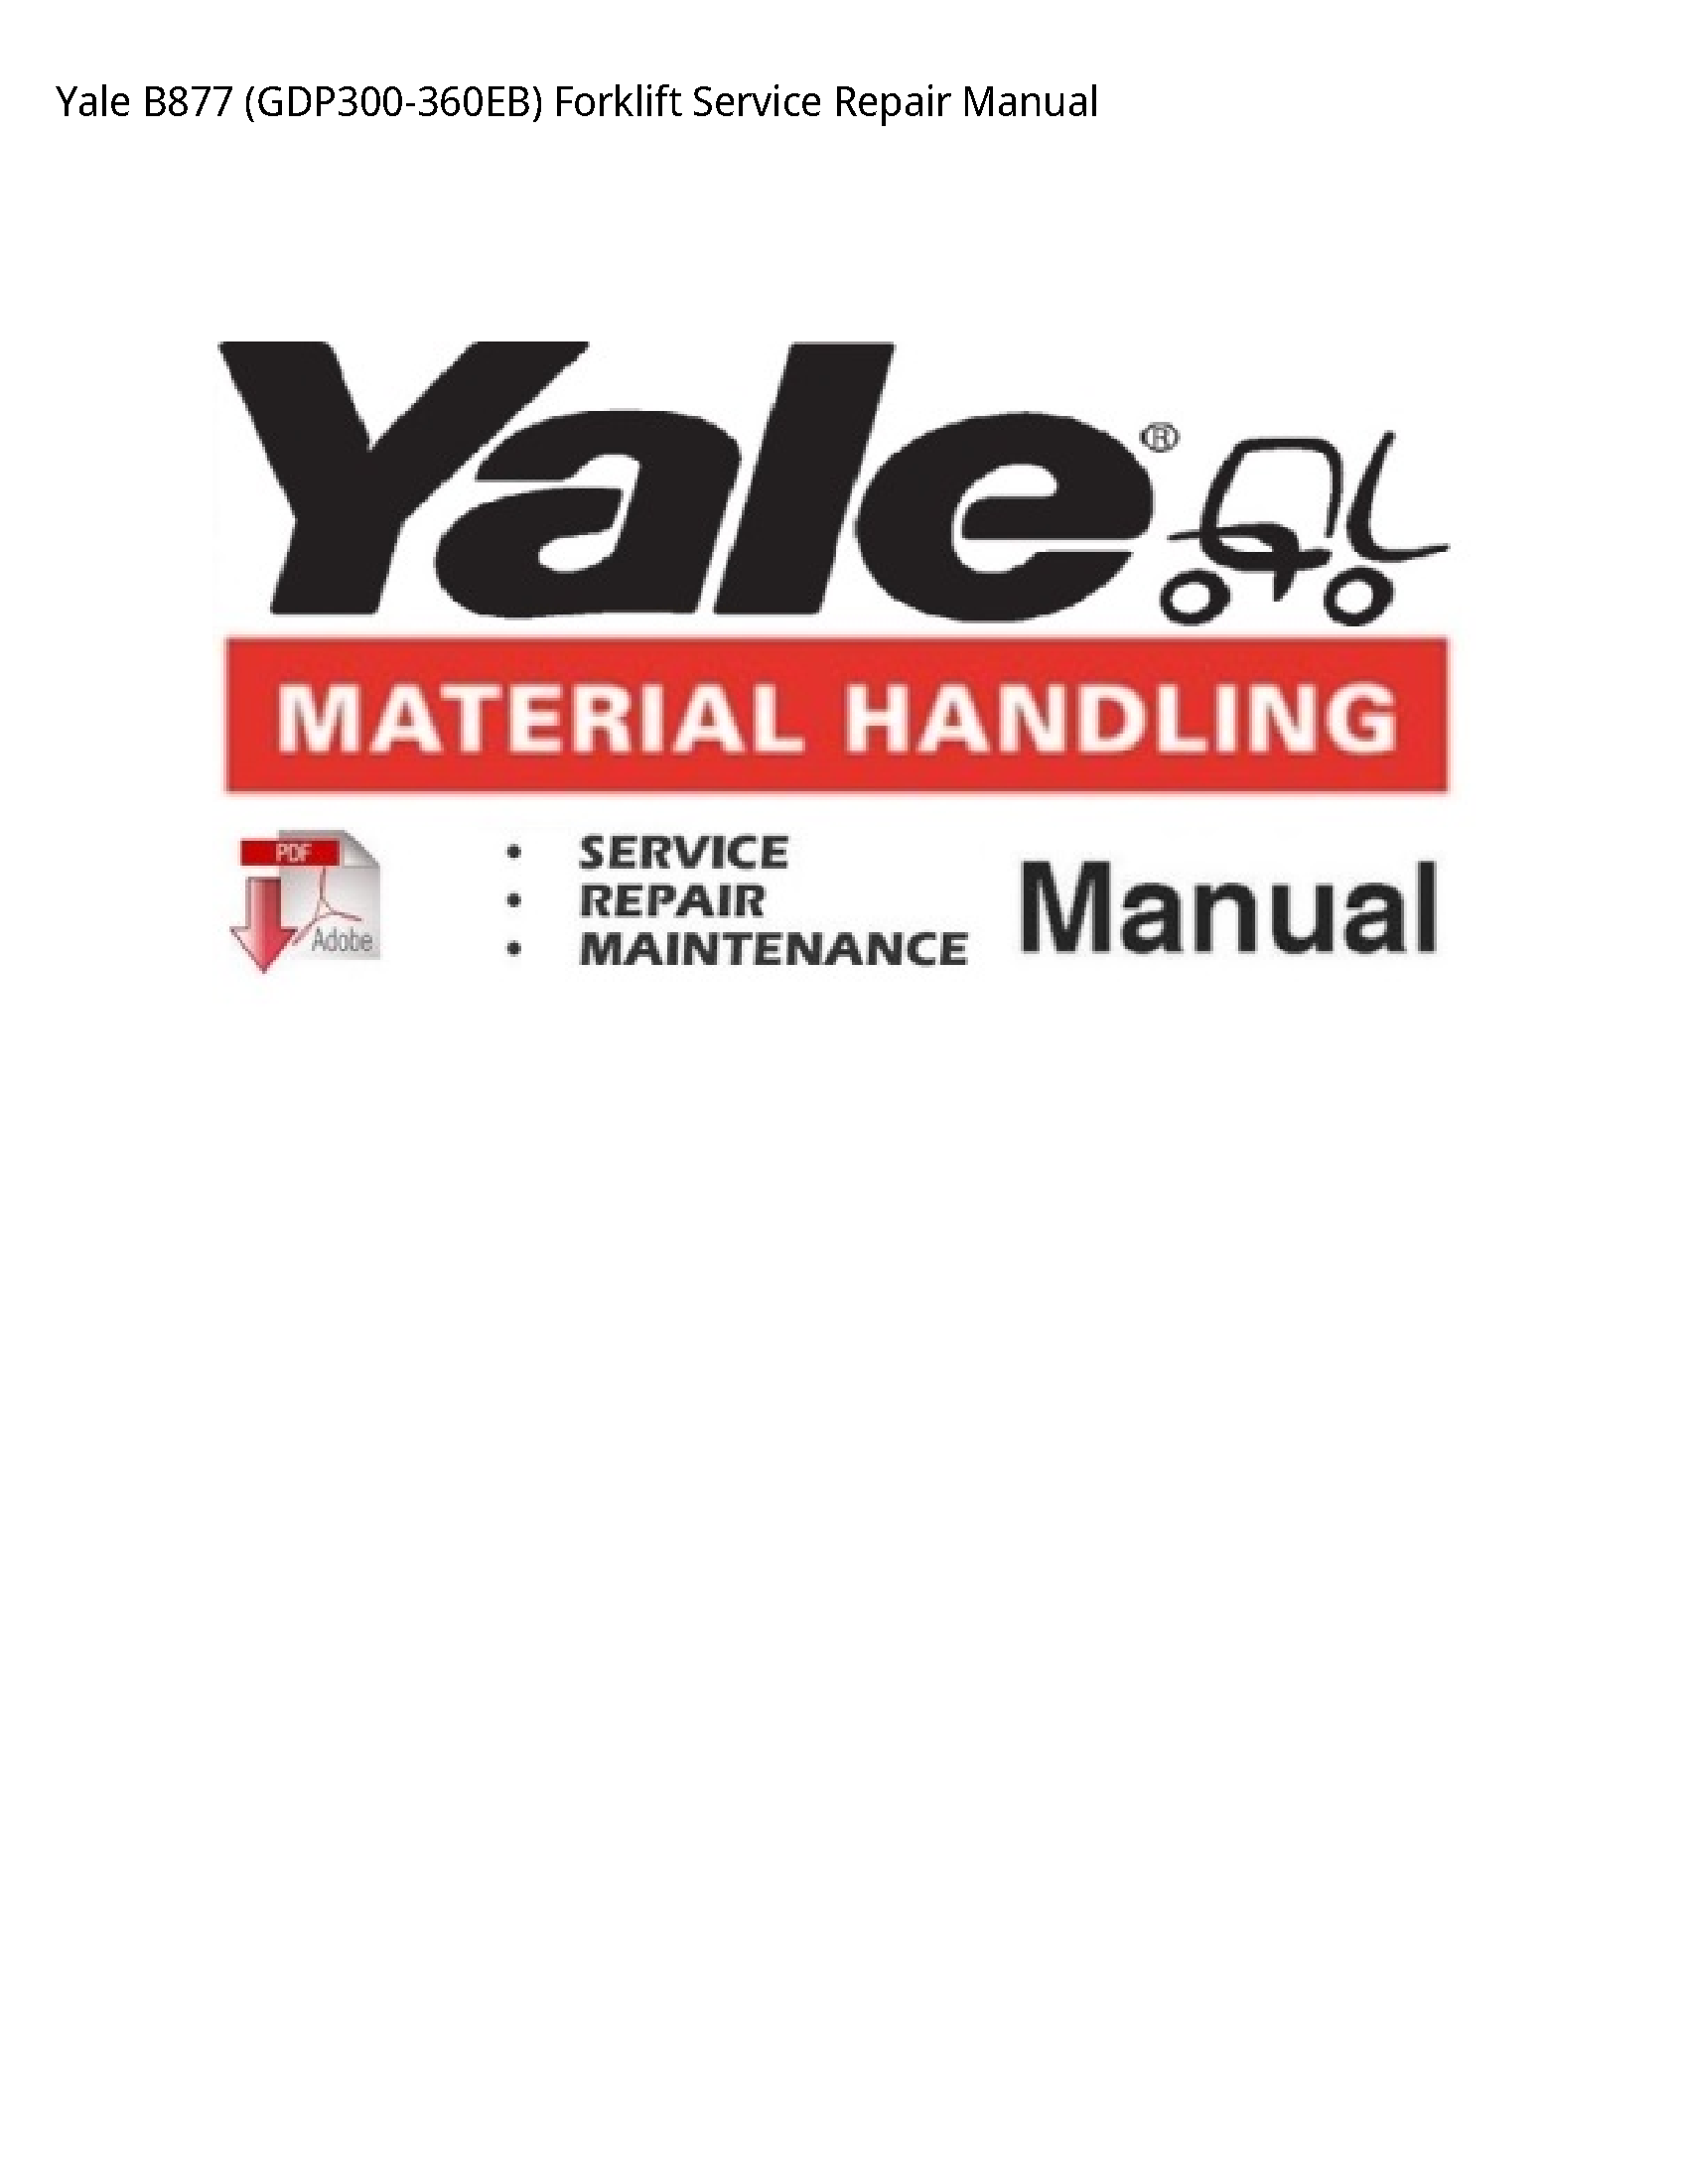 Yale B877 Forklift manual